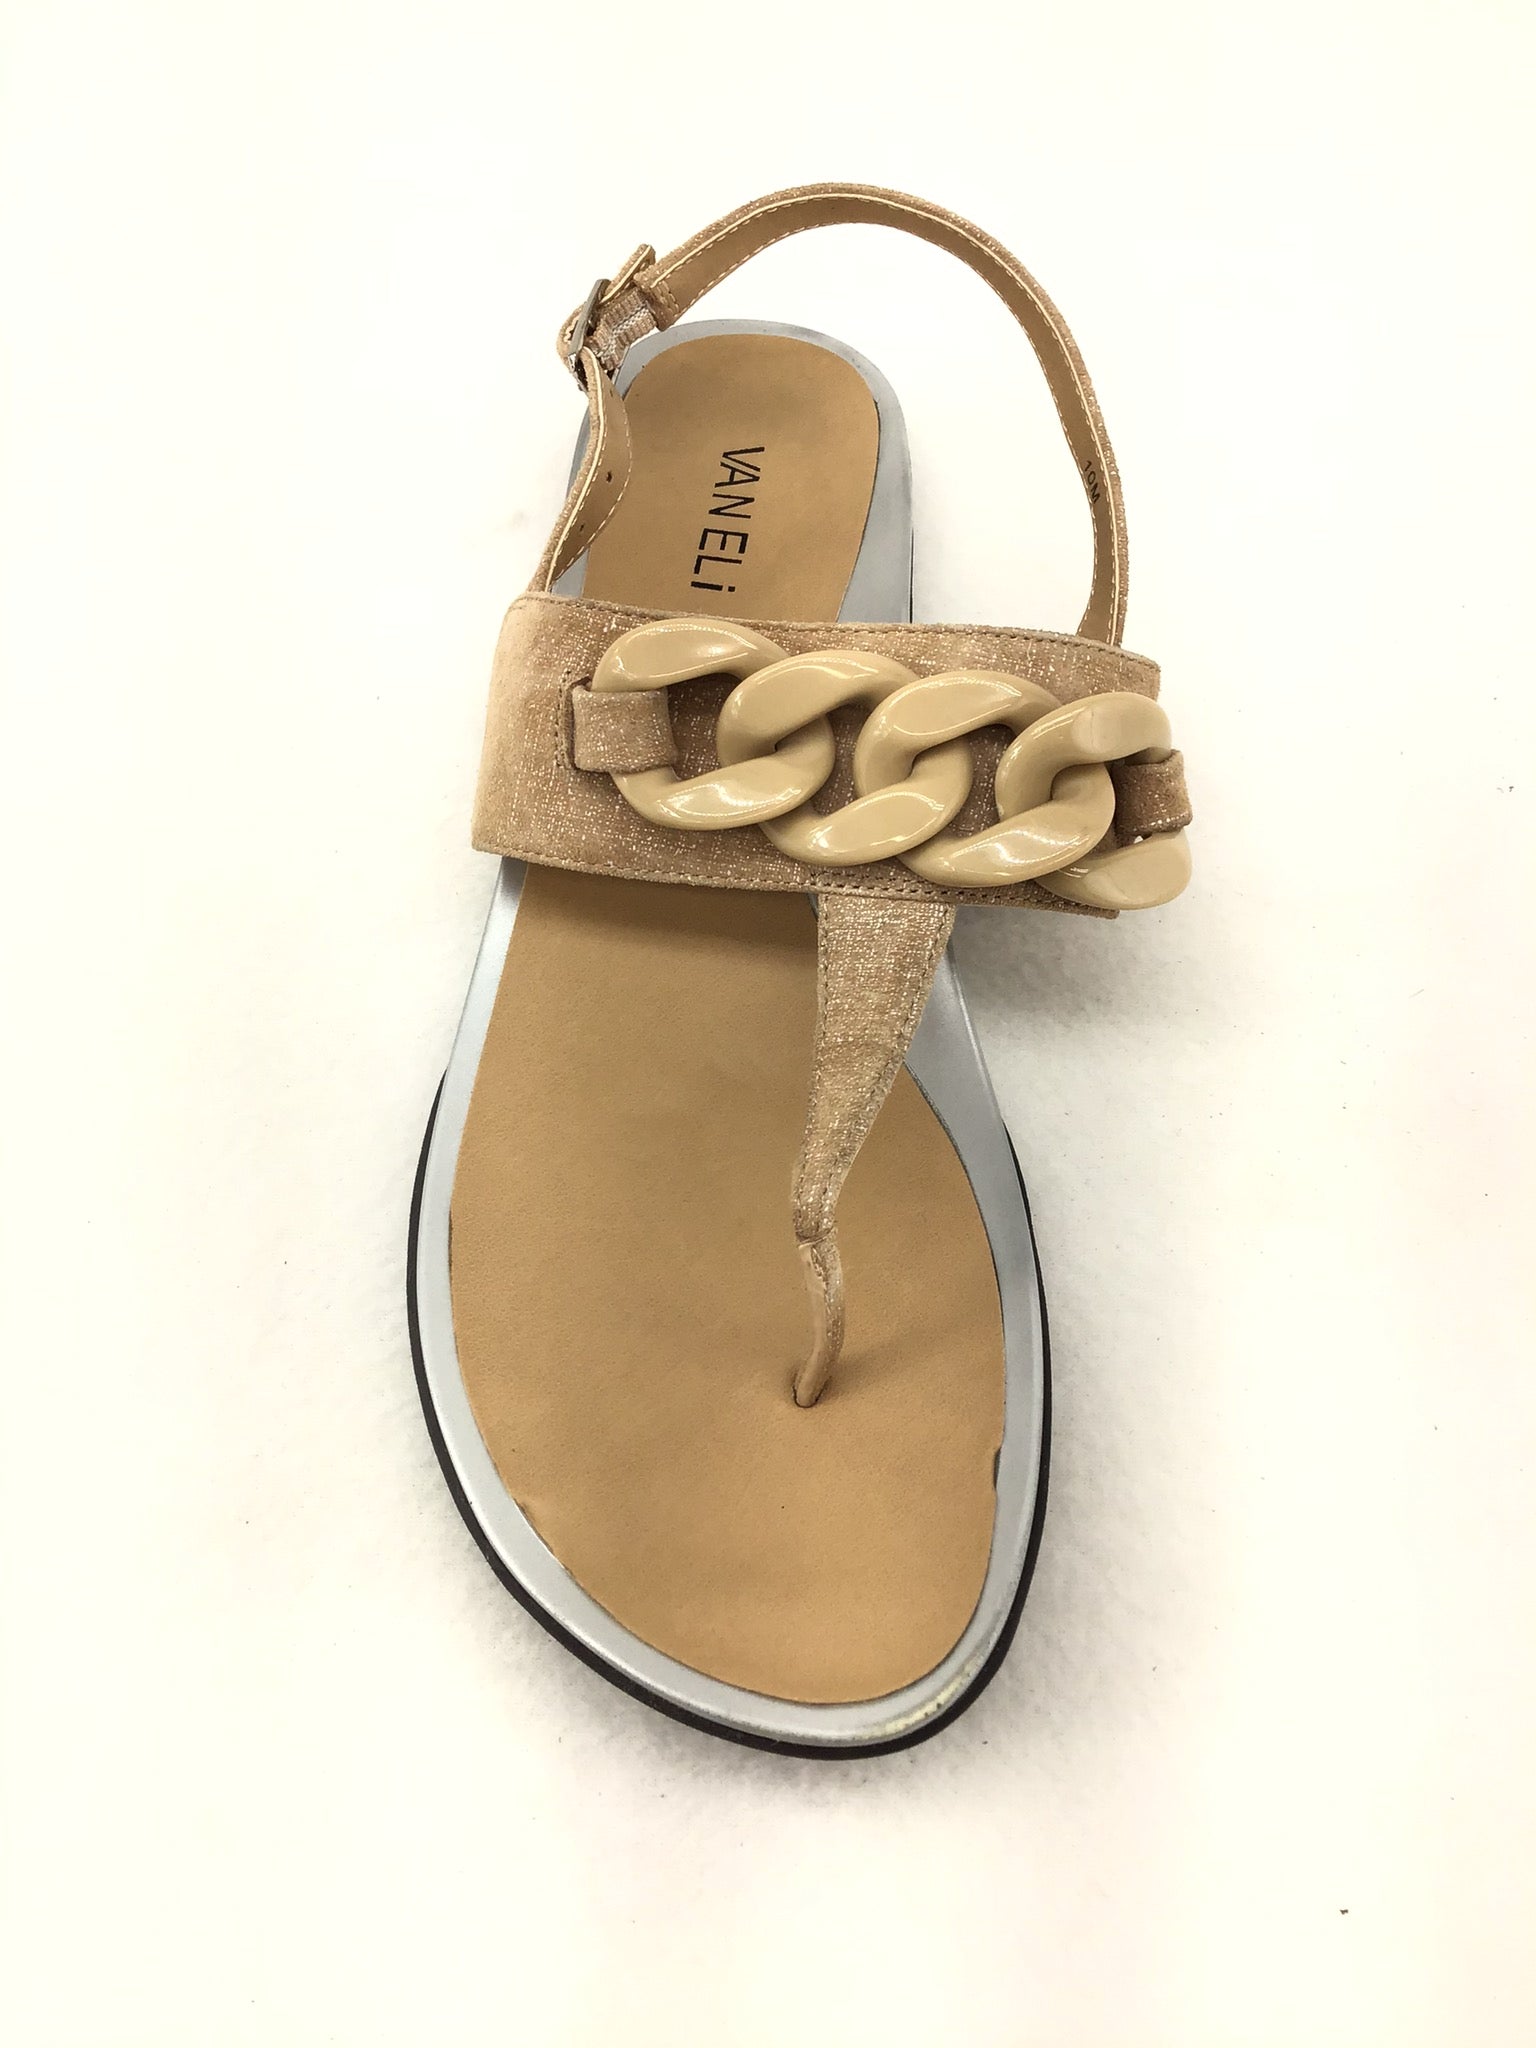 Vaneli Slingback Sandals Size 10M